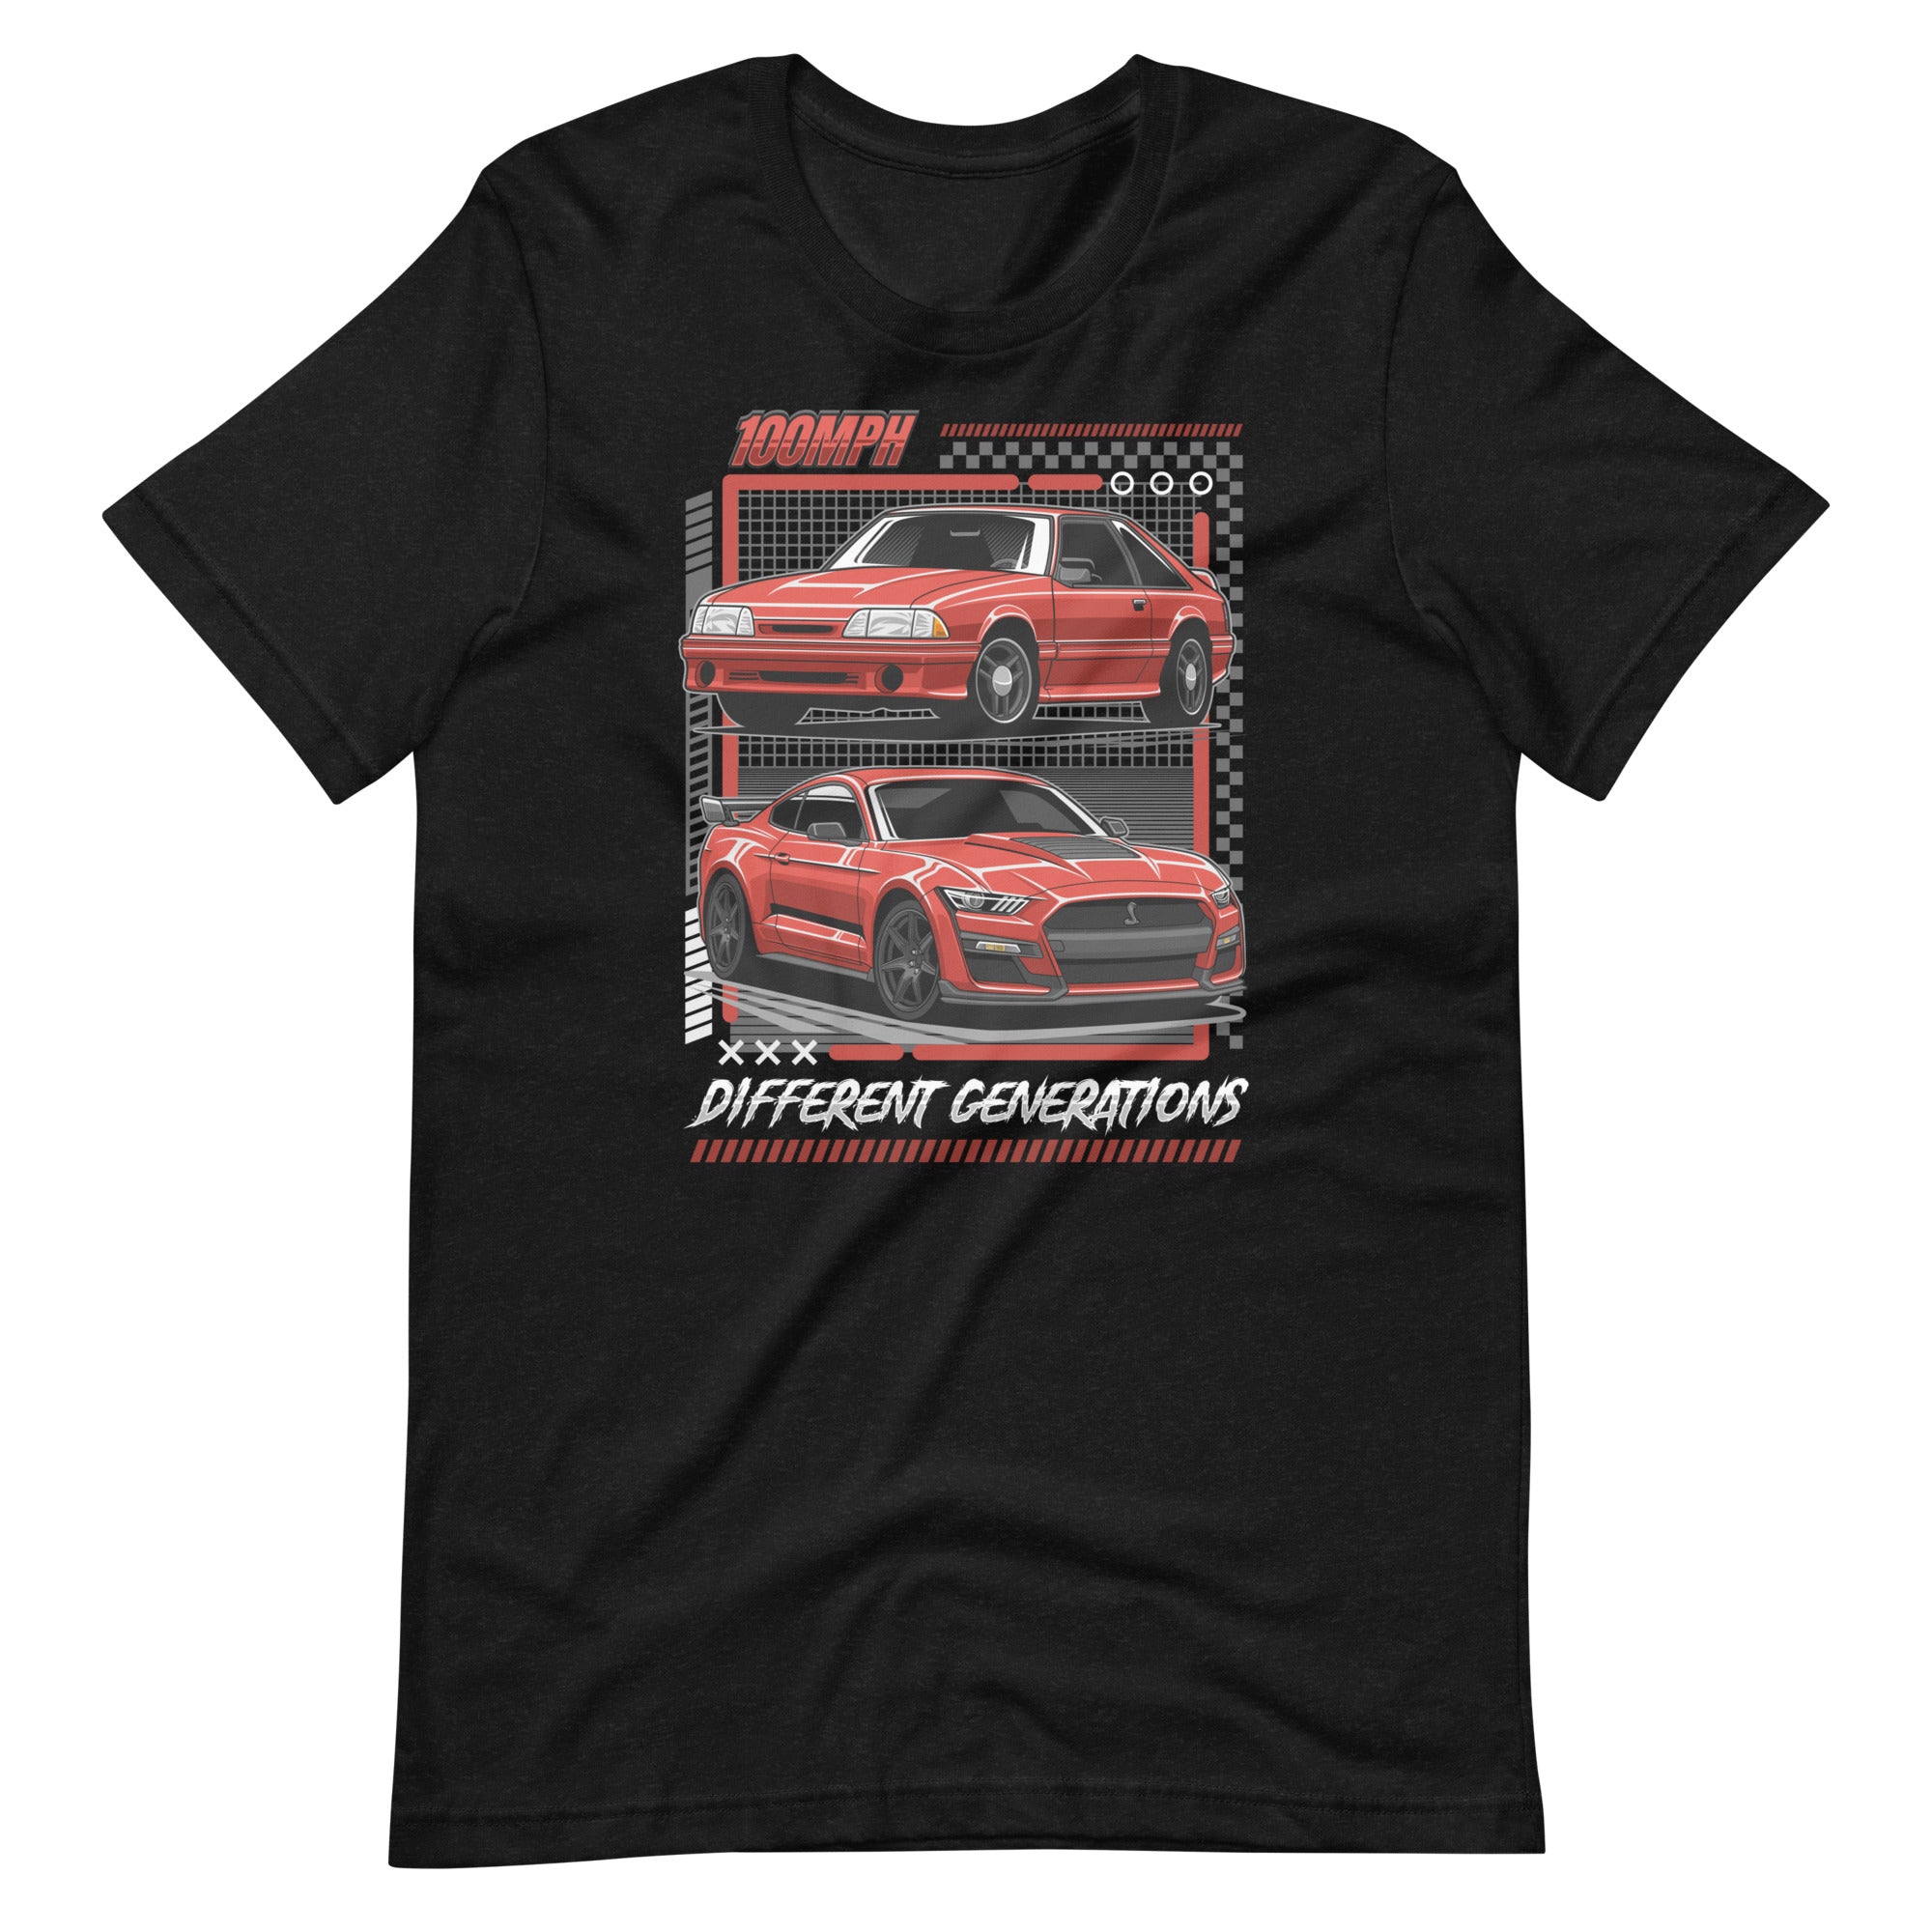 "Different Generations" '93 Shelby Cobra vs. '22 Shelby Cobra T-Shirt